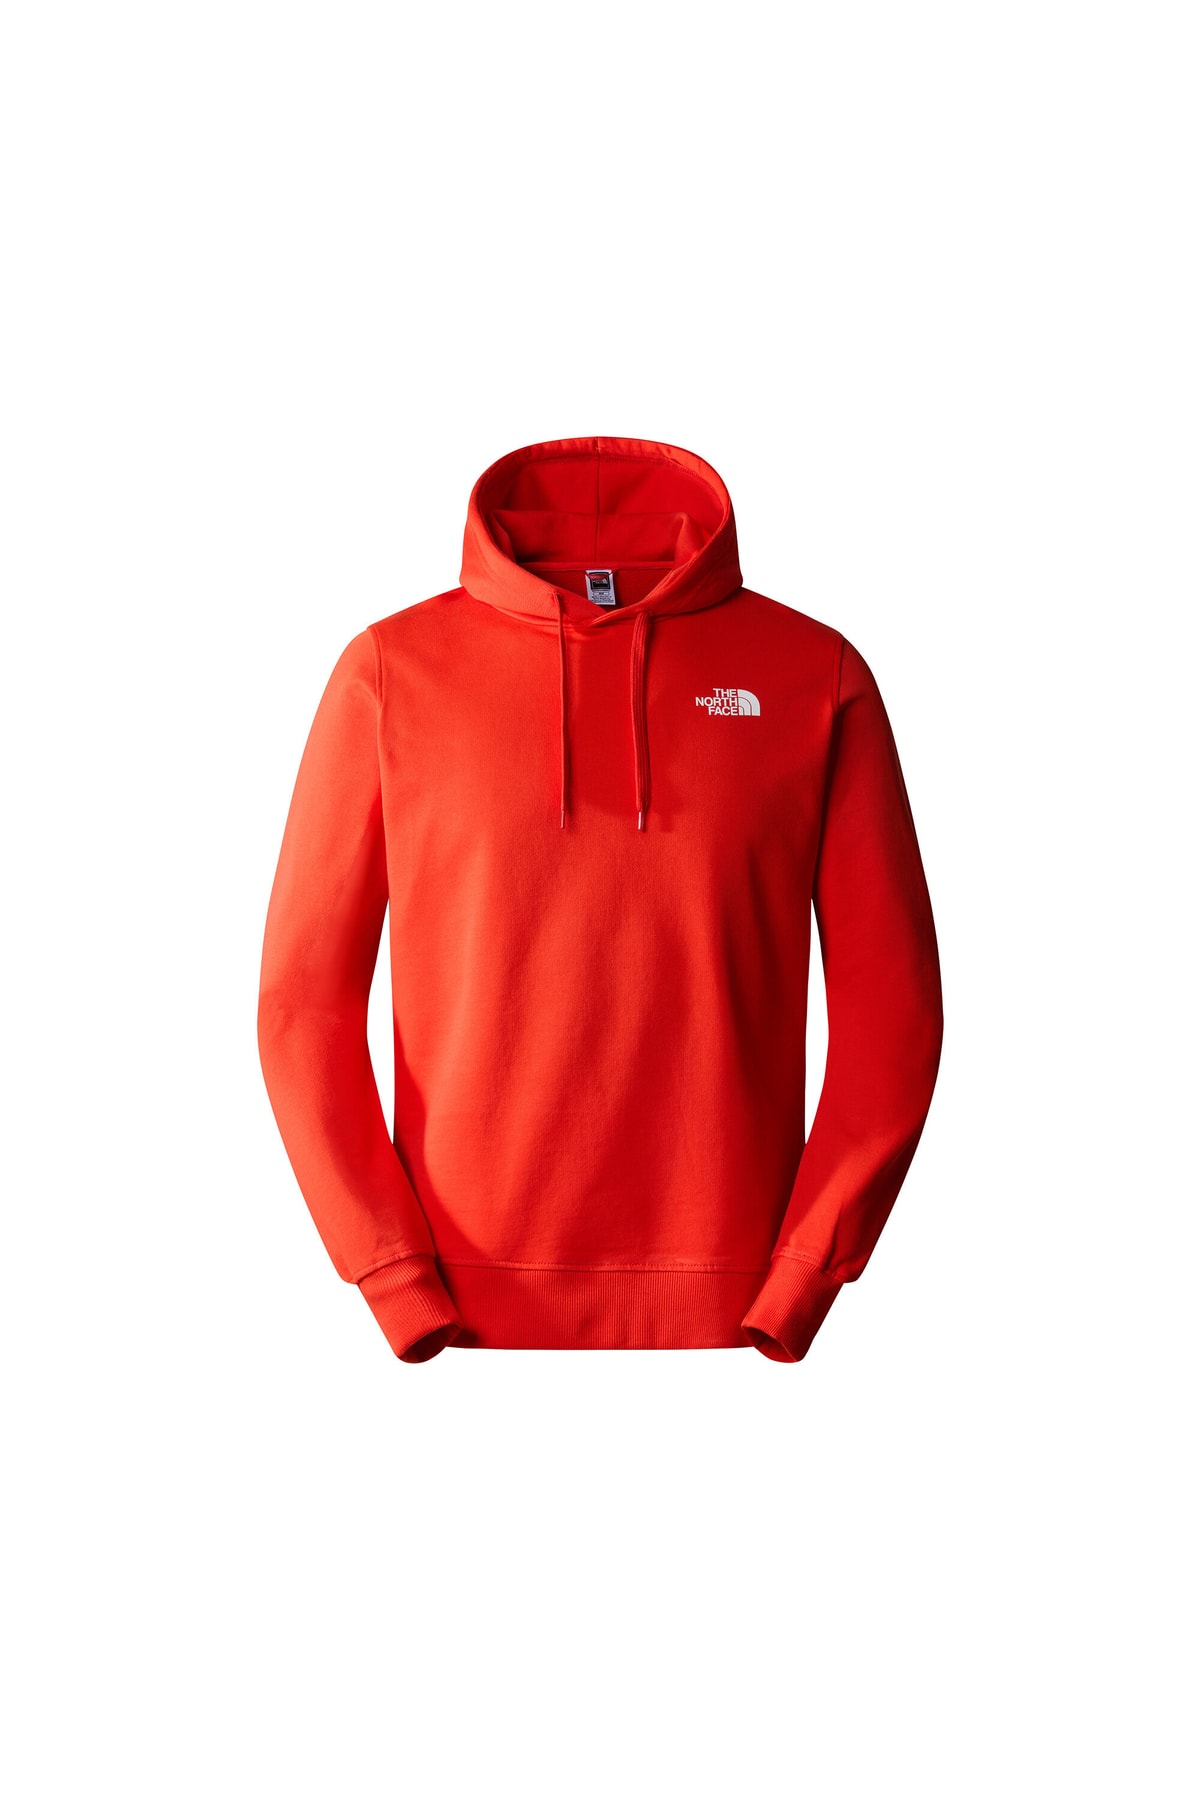 THE NORTH FACE M Seasonal Drew Peak Pullover Light Erkek Outdoor Sweatshirts Nf0a2s5715q1 Kırmızı